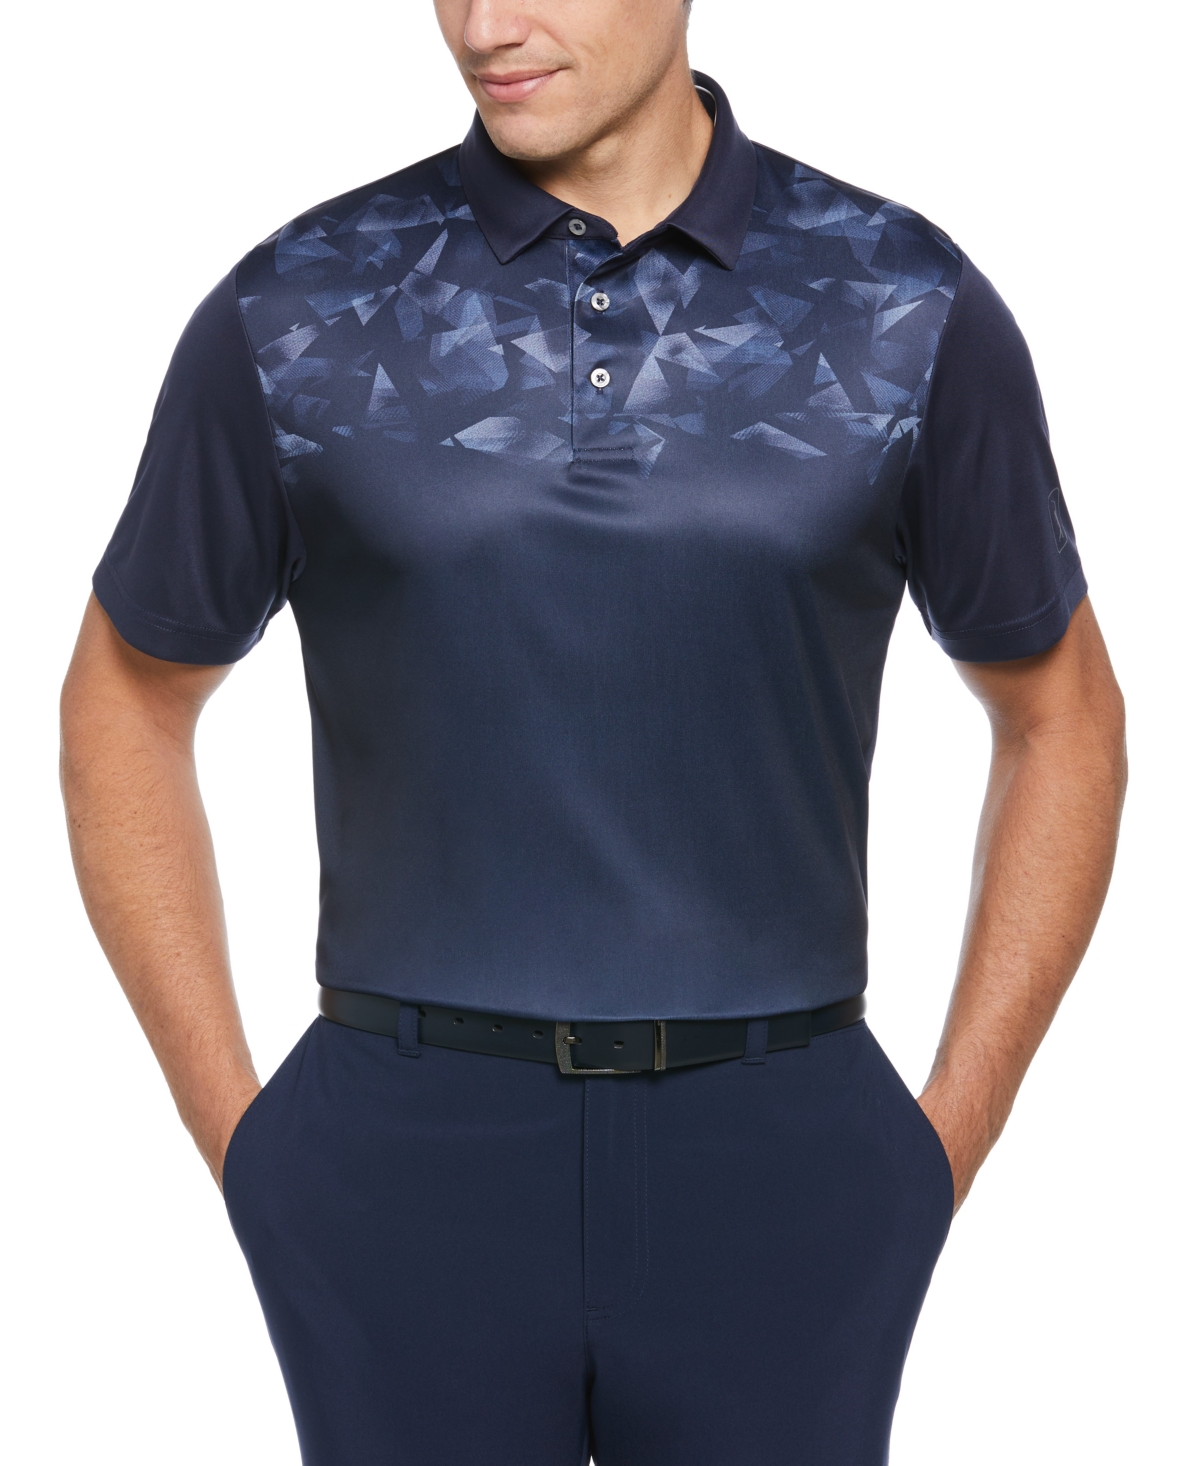 Men's Athletic Fit Geo Print Short Sleeve Golf Polo Shirt - Peacoat